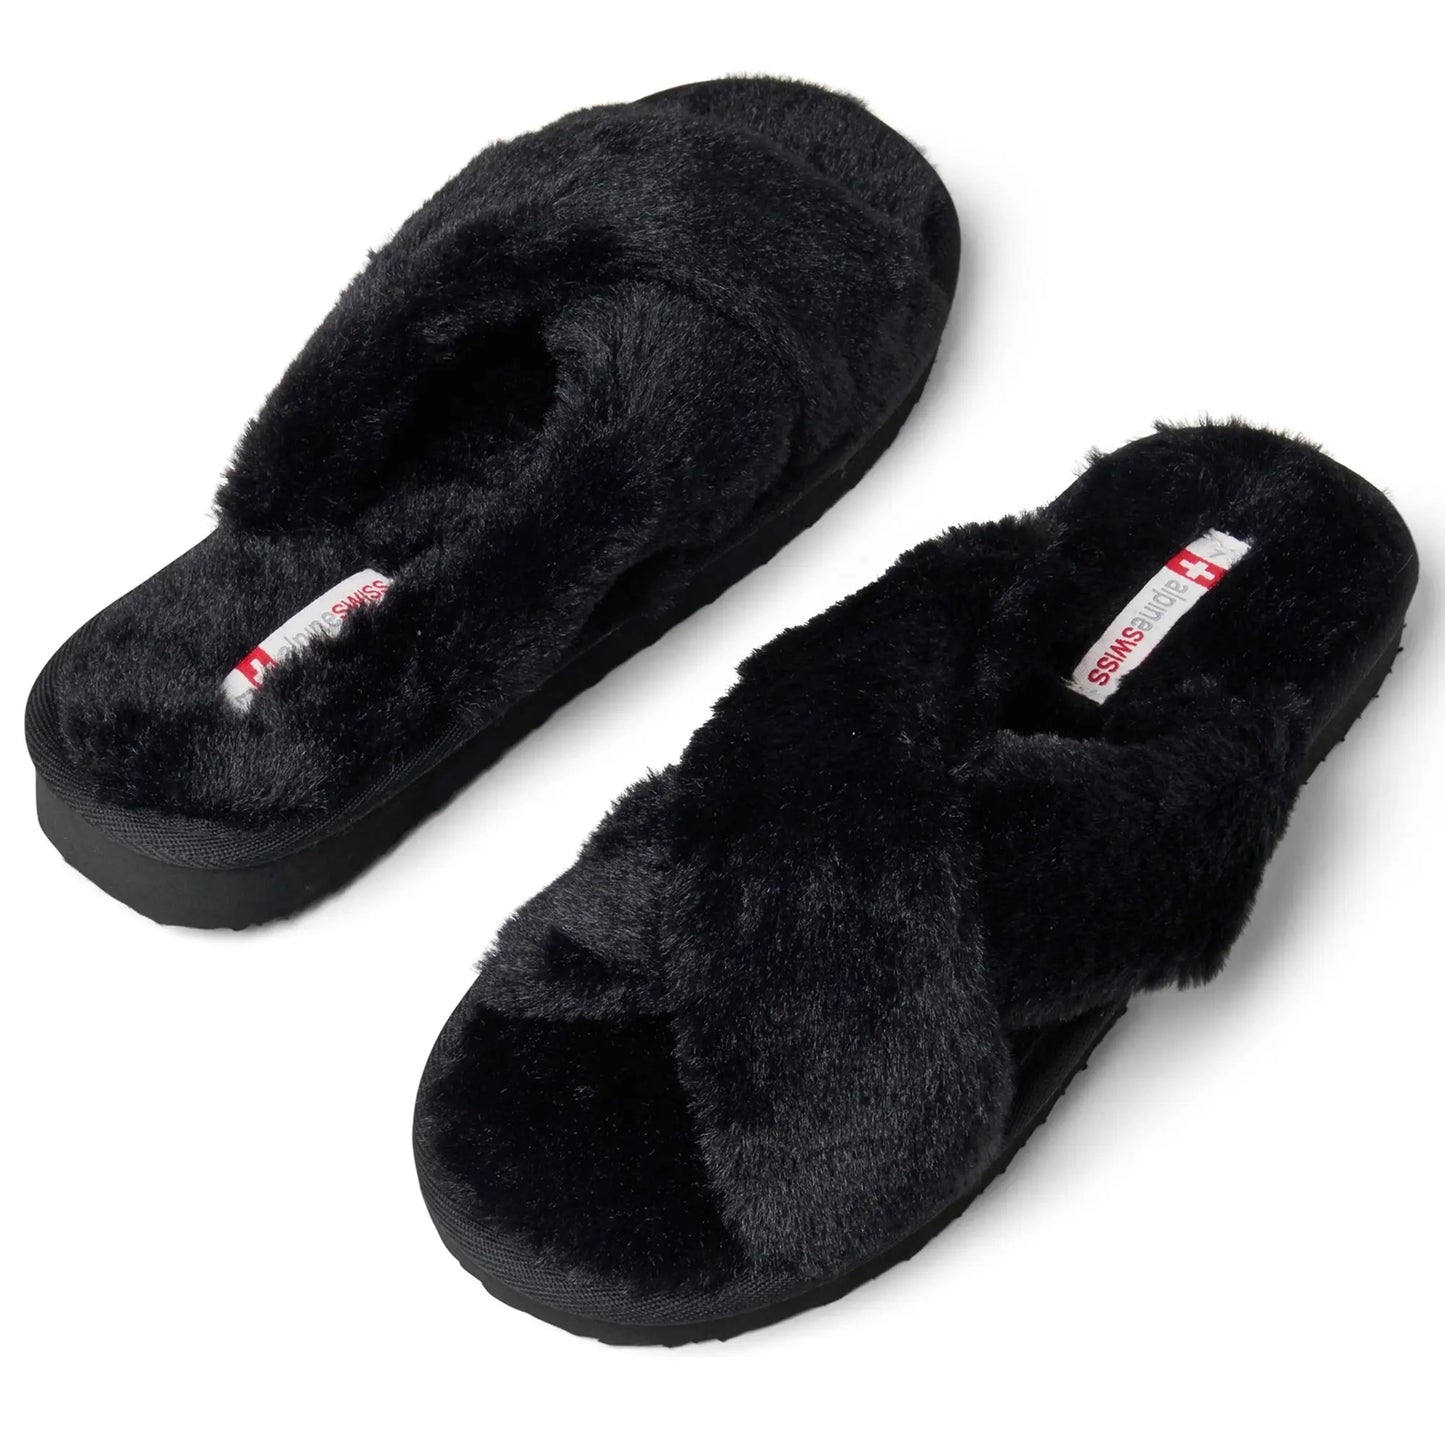 Womens Fuzzy Fluffy Slippers Memory Foam Indoor Outdoor Flat Sandals Black Suede